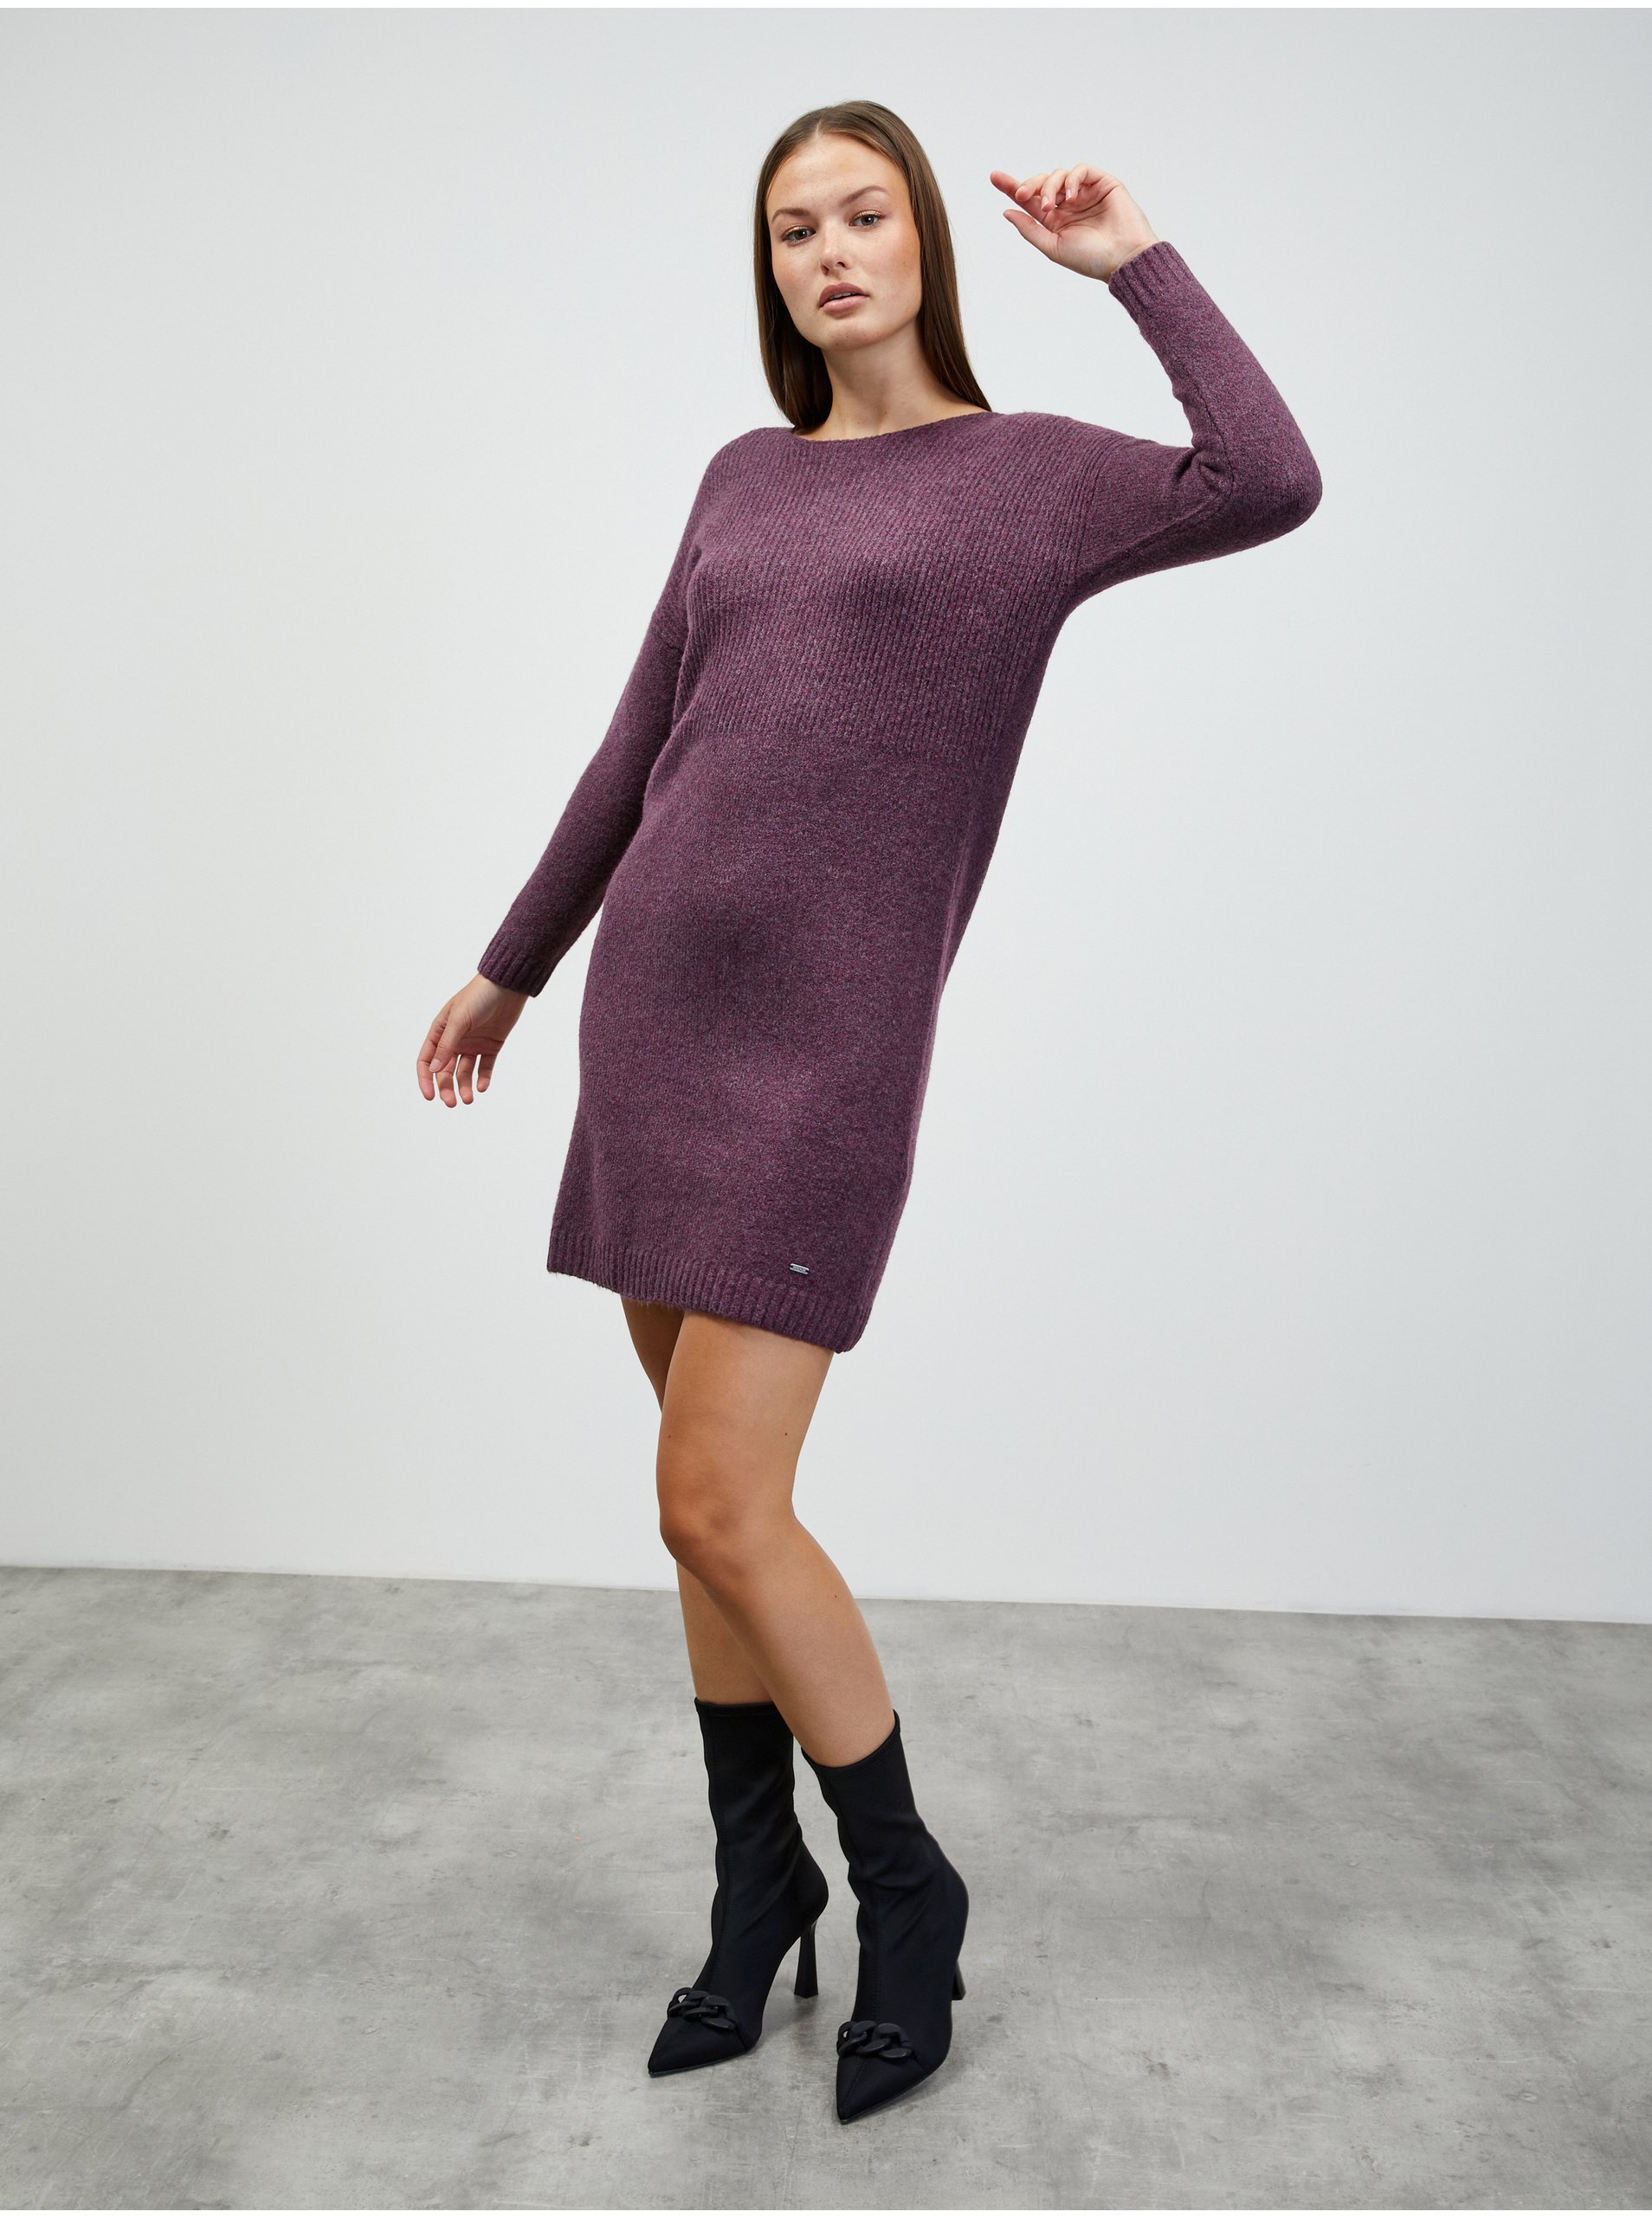 Lacno Fialové svetrové šaty ZOOT.lab Coryn